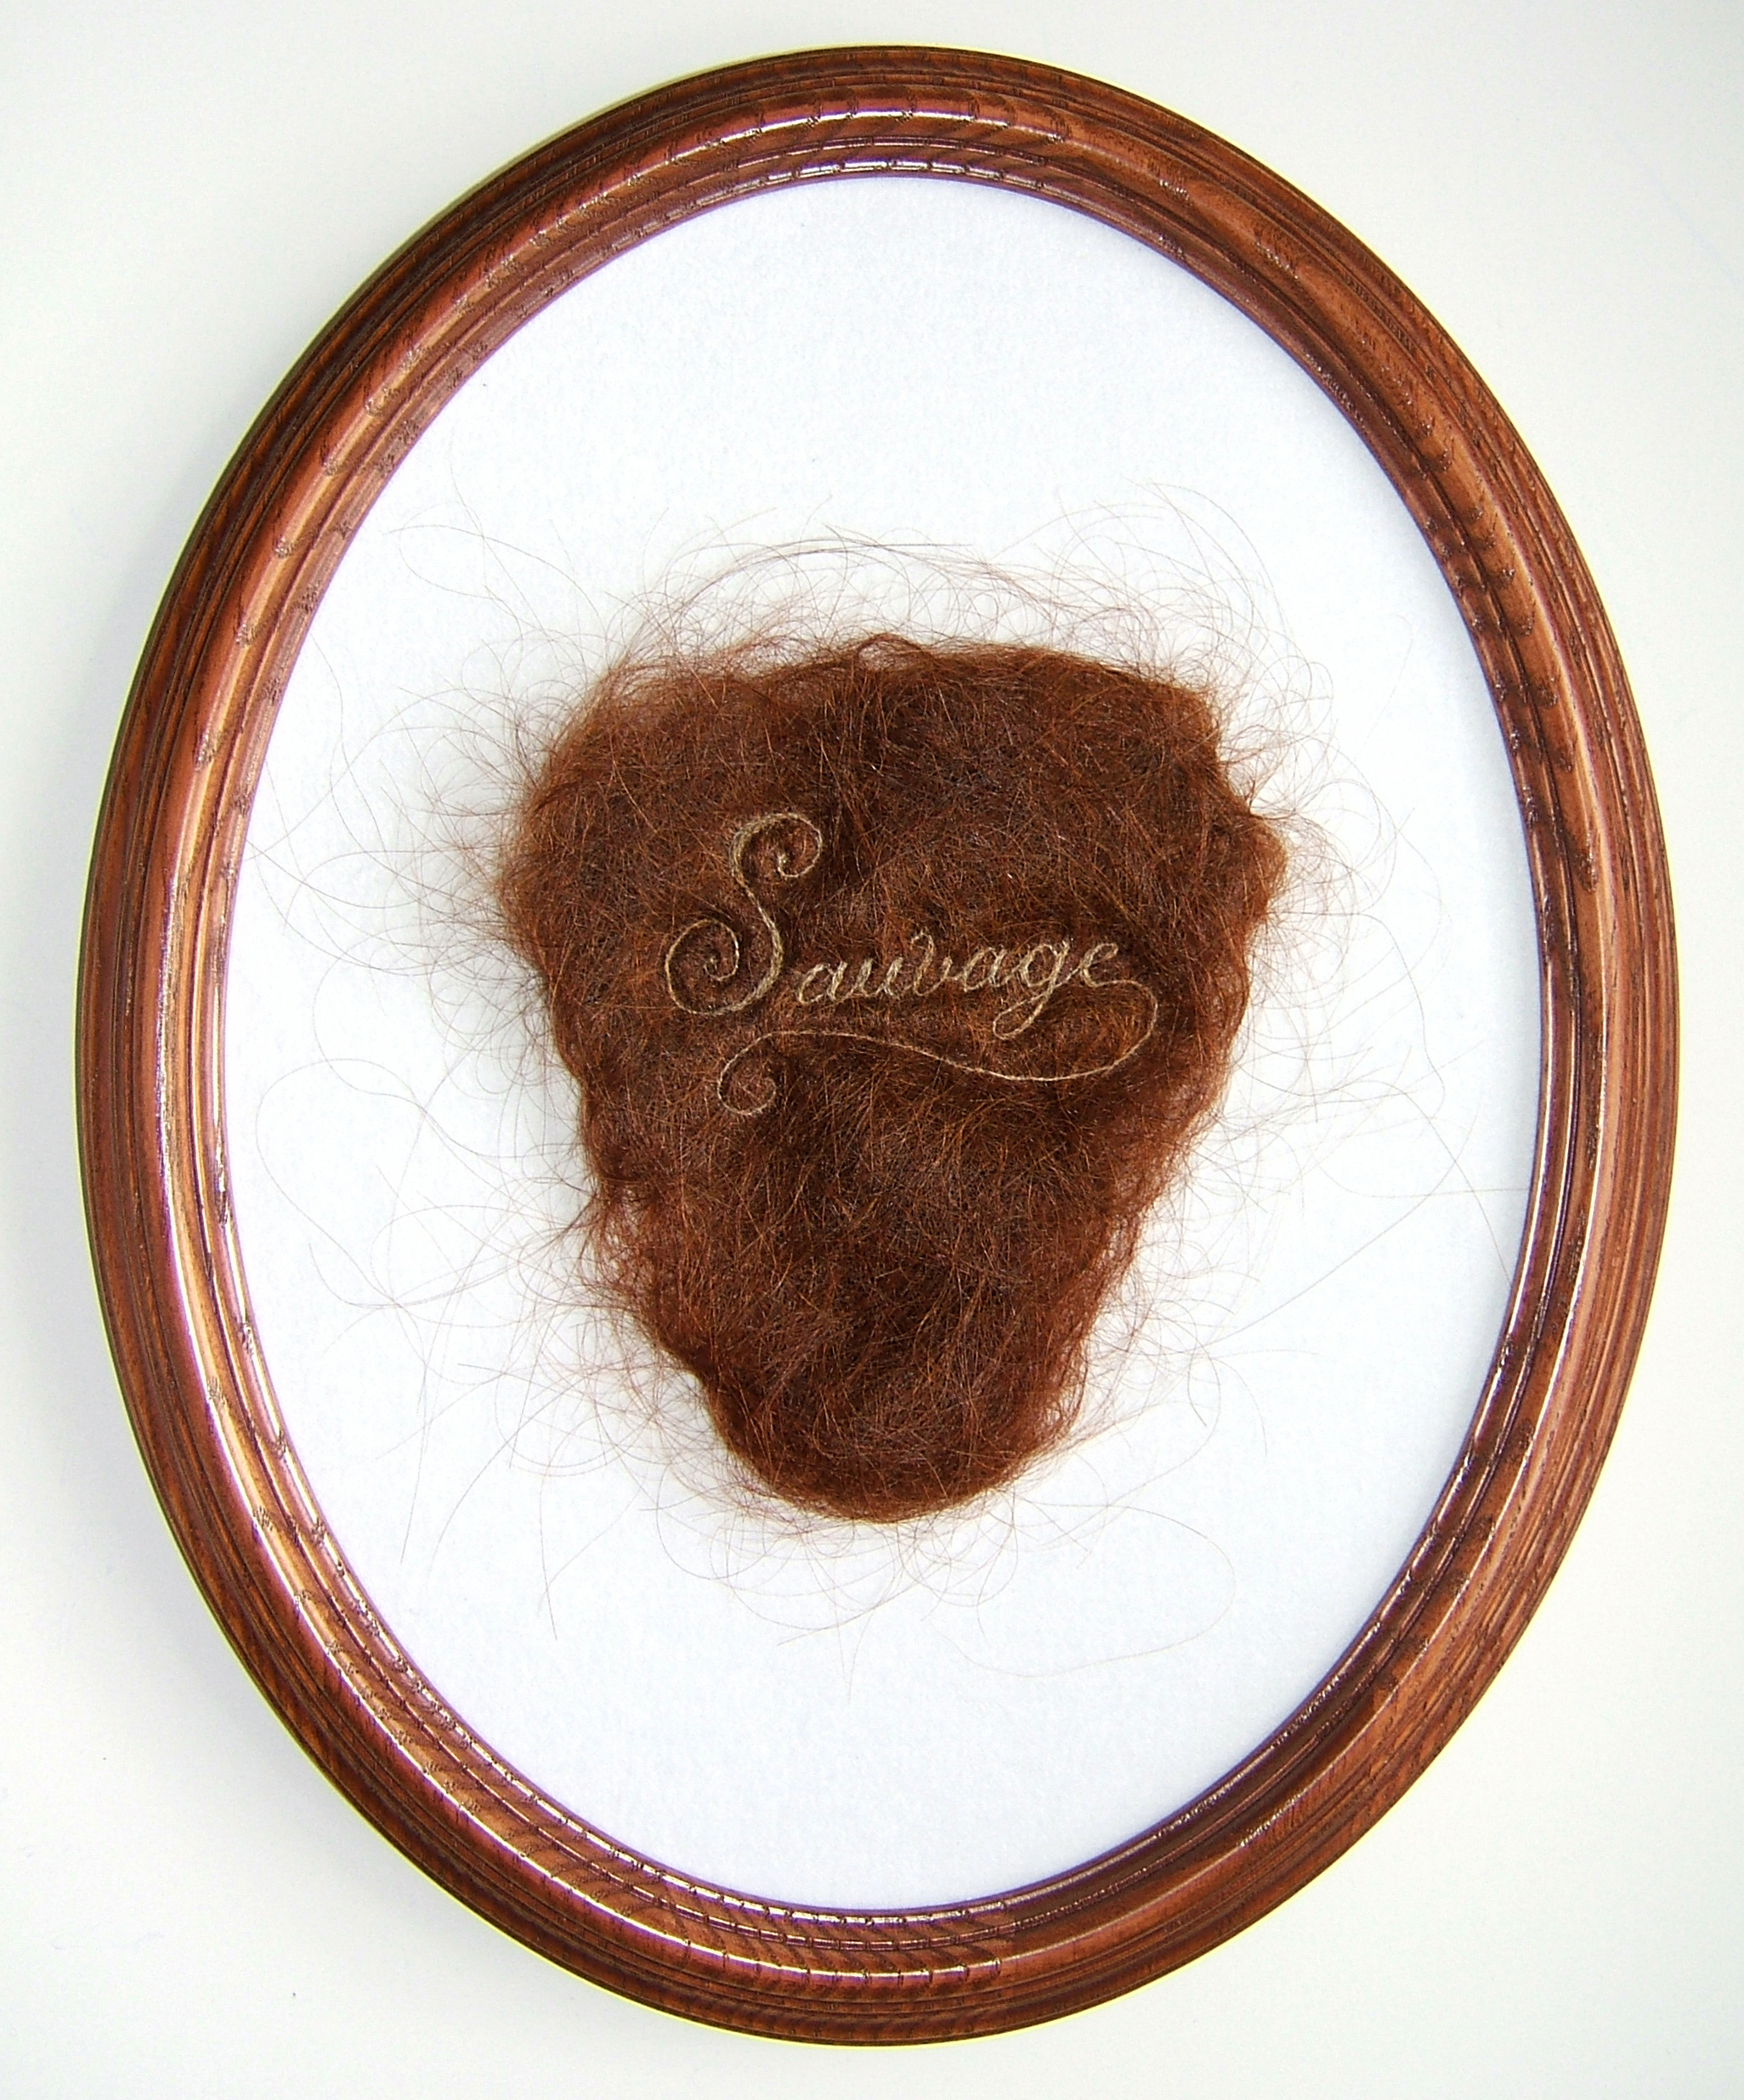 human hair embroidery